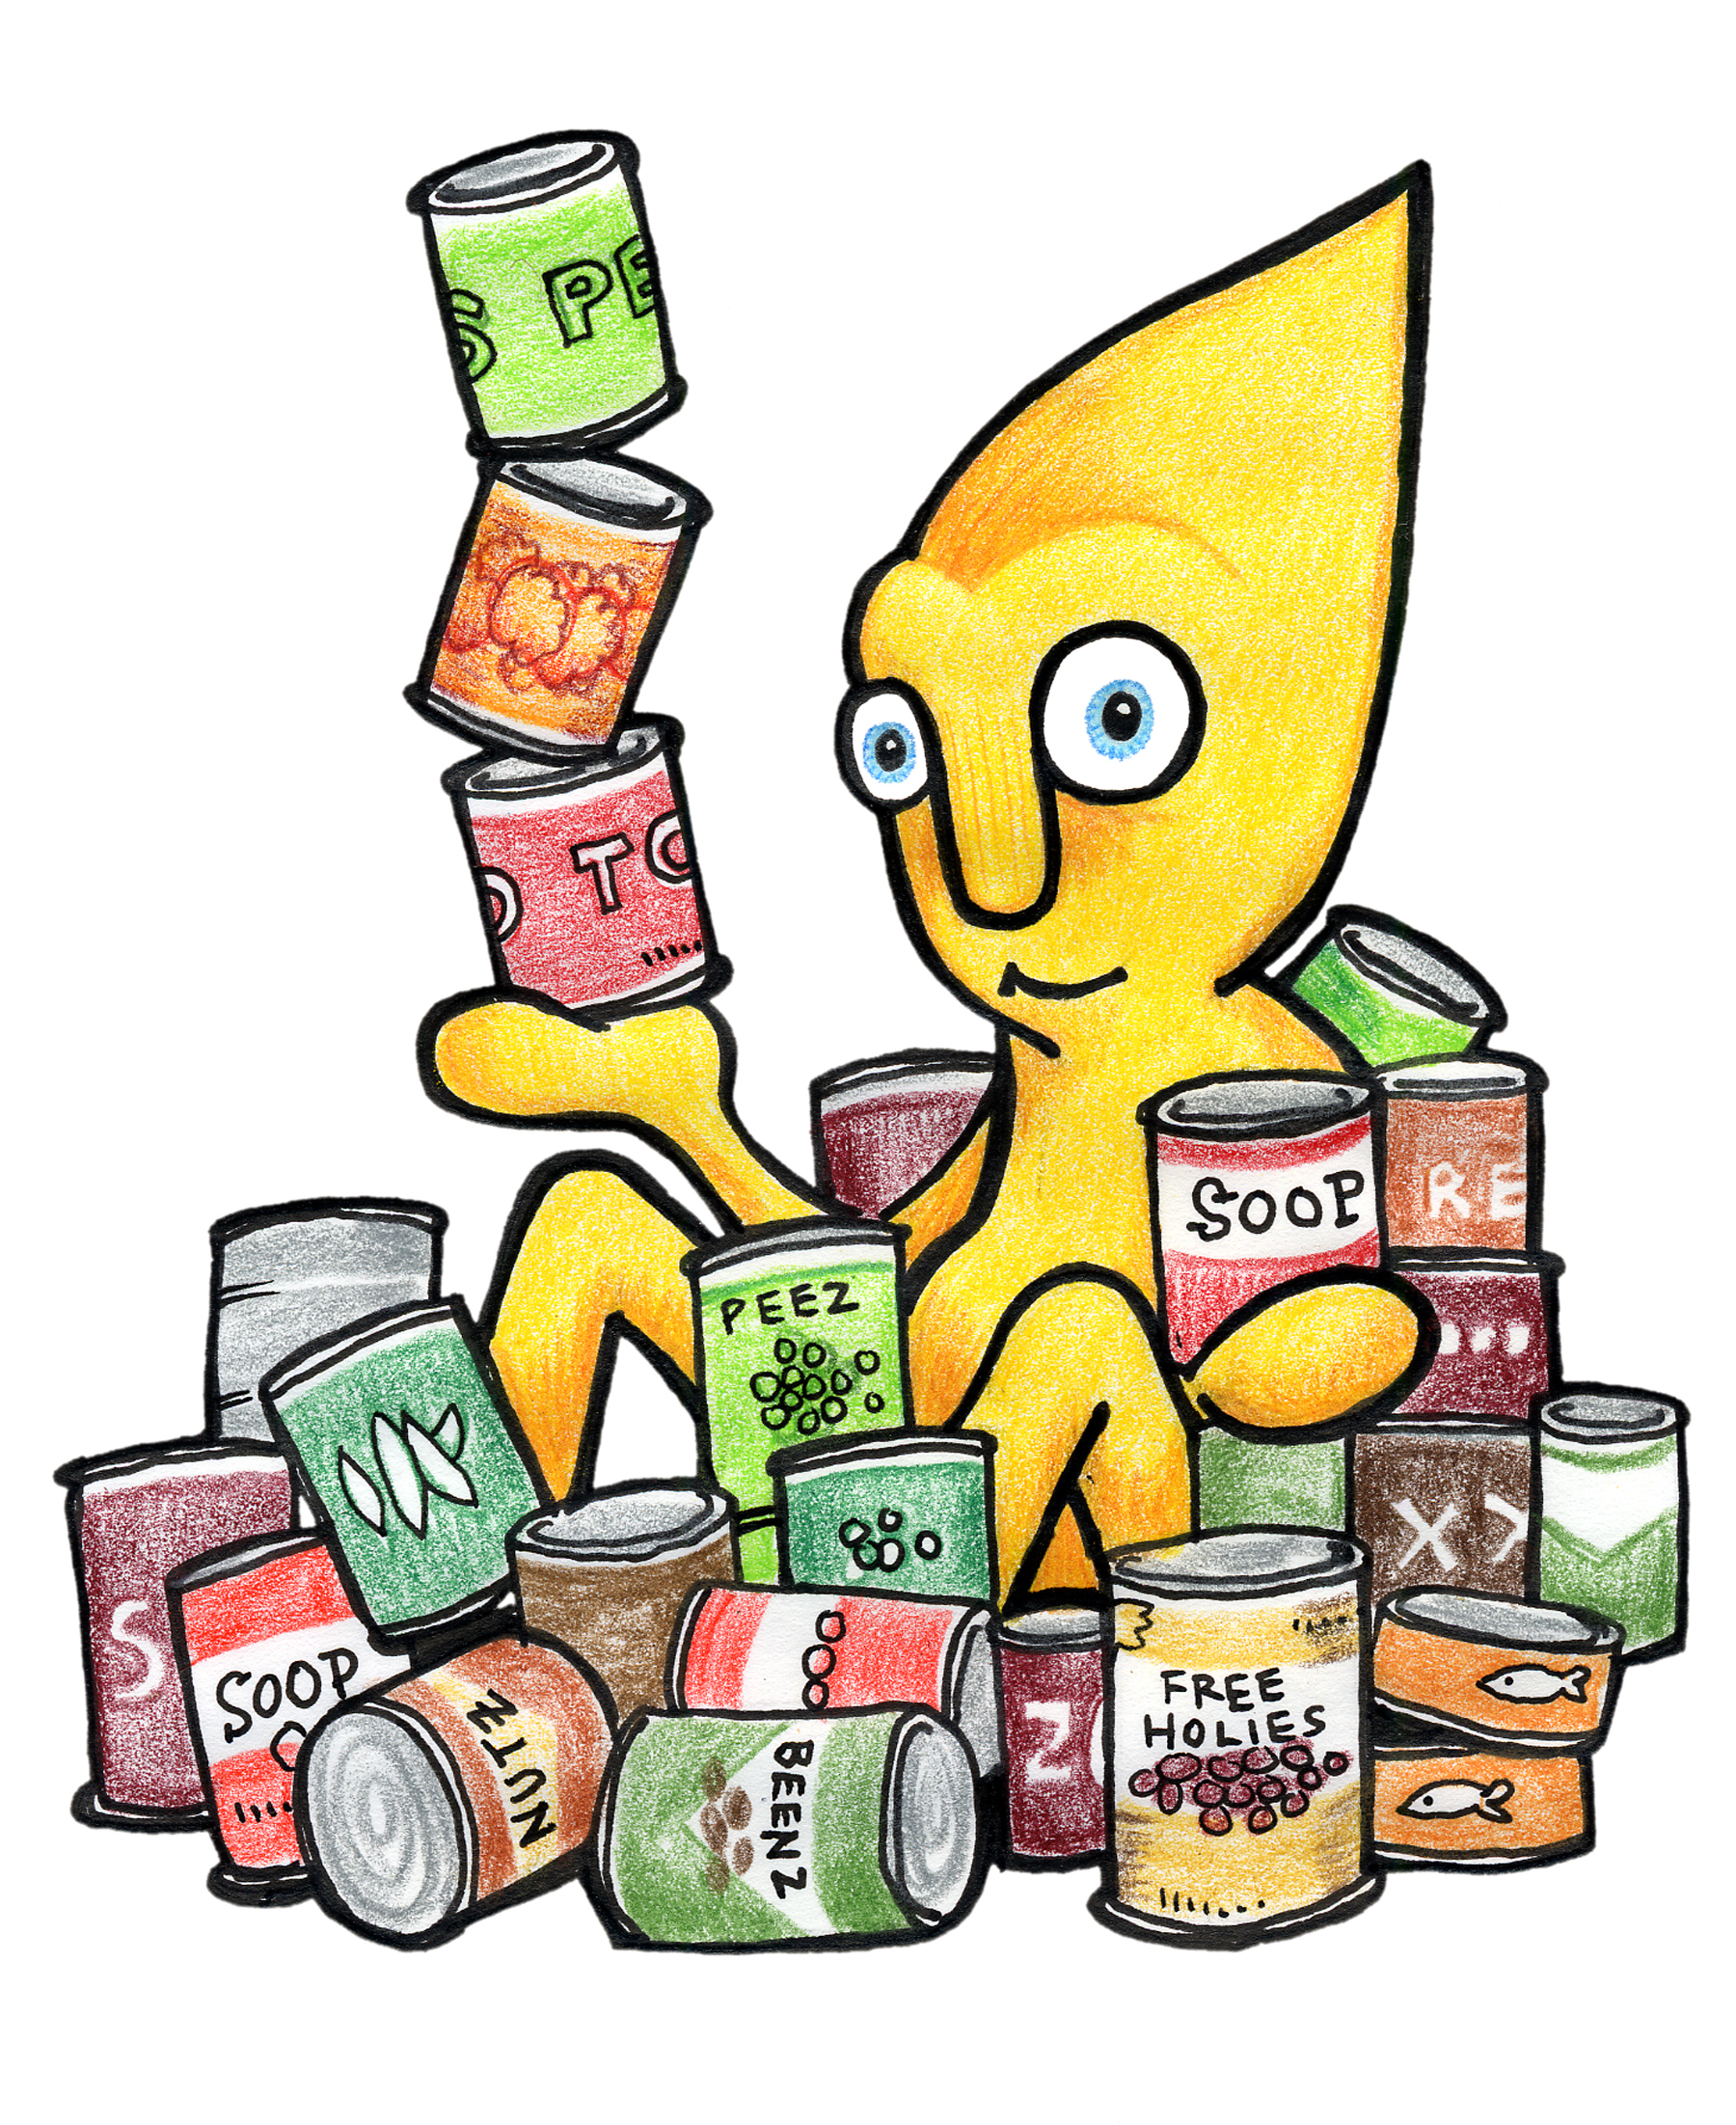 Canned food food drive clip a - Canned Food Drive Clip Art